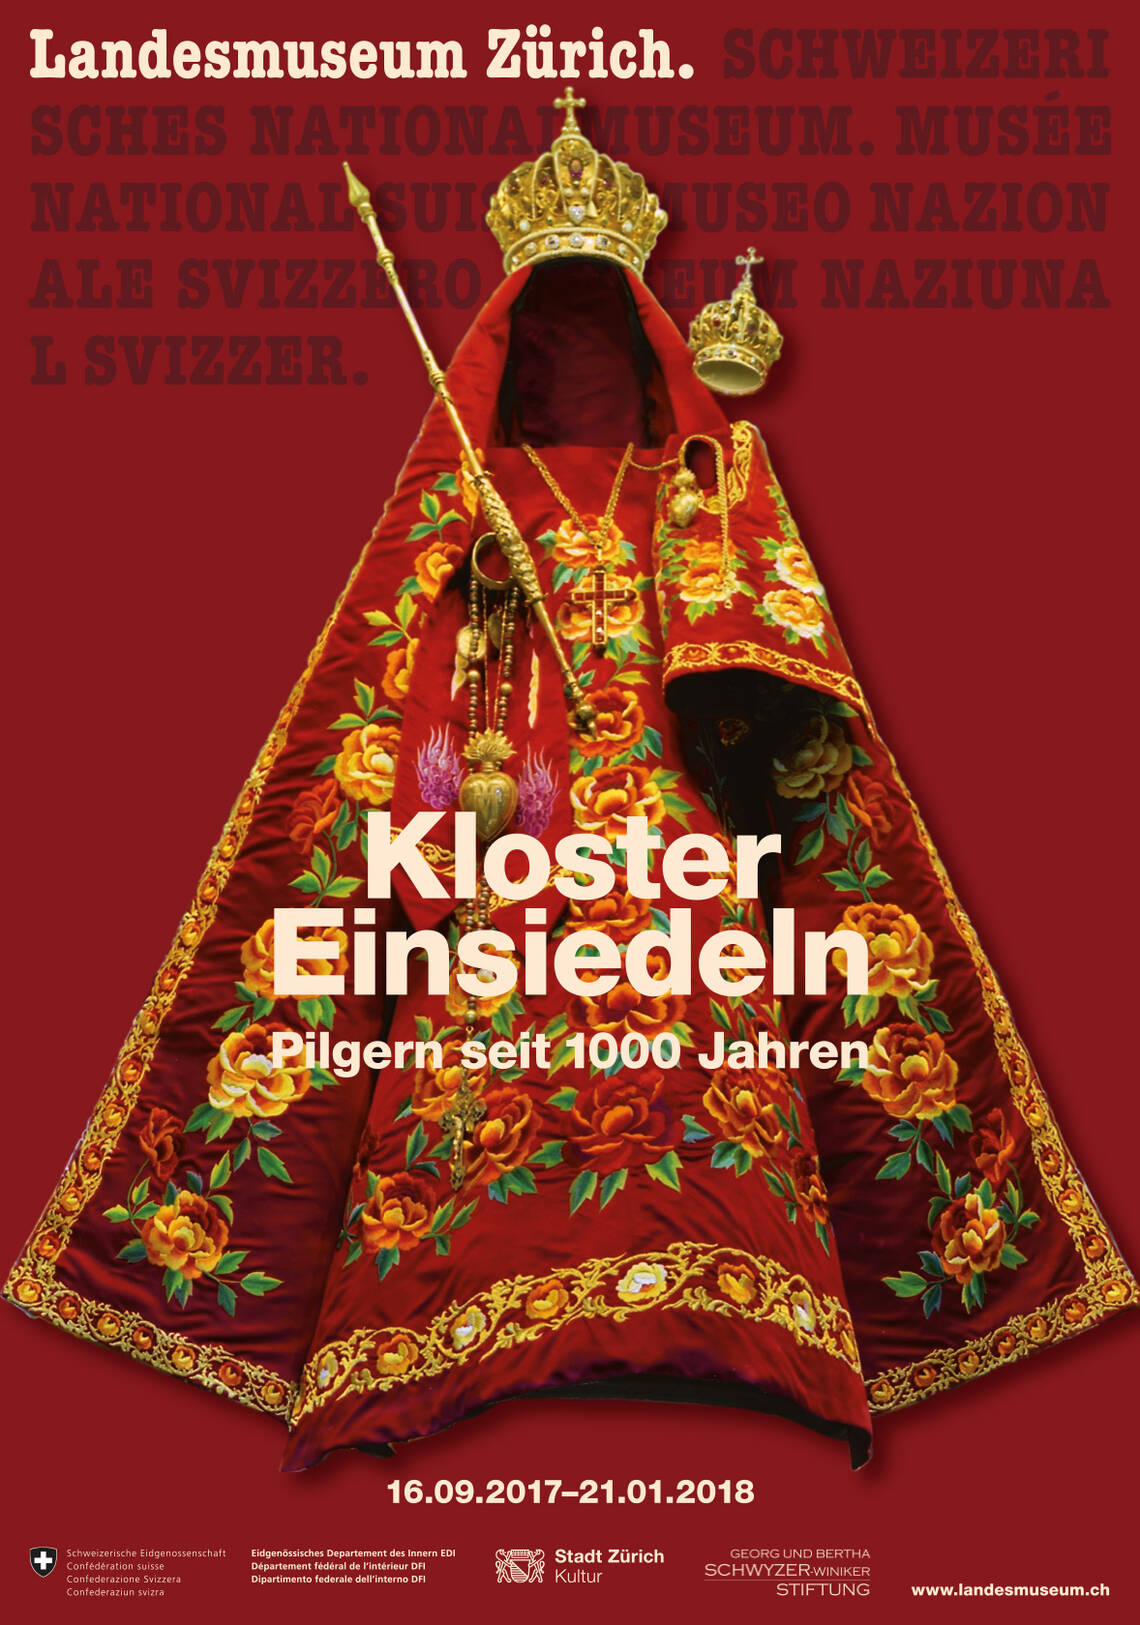 Poster of the exhibition "Einsiedeln